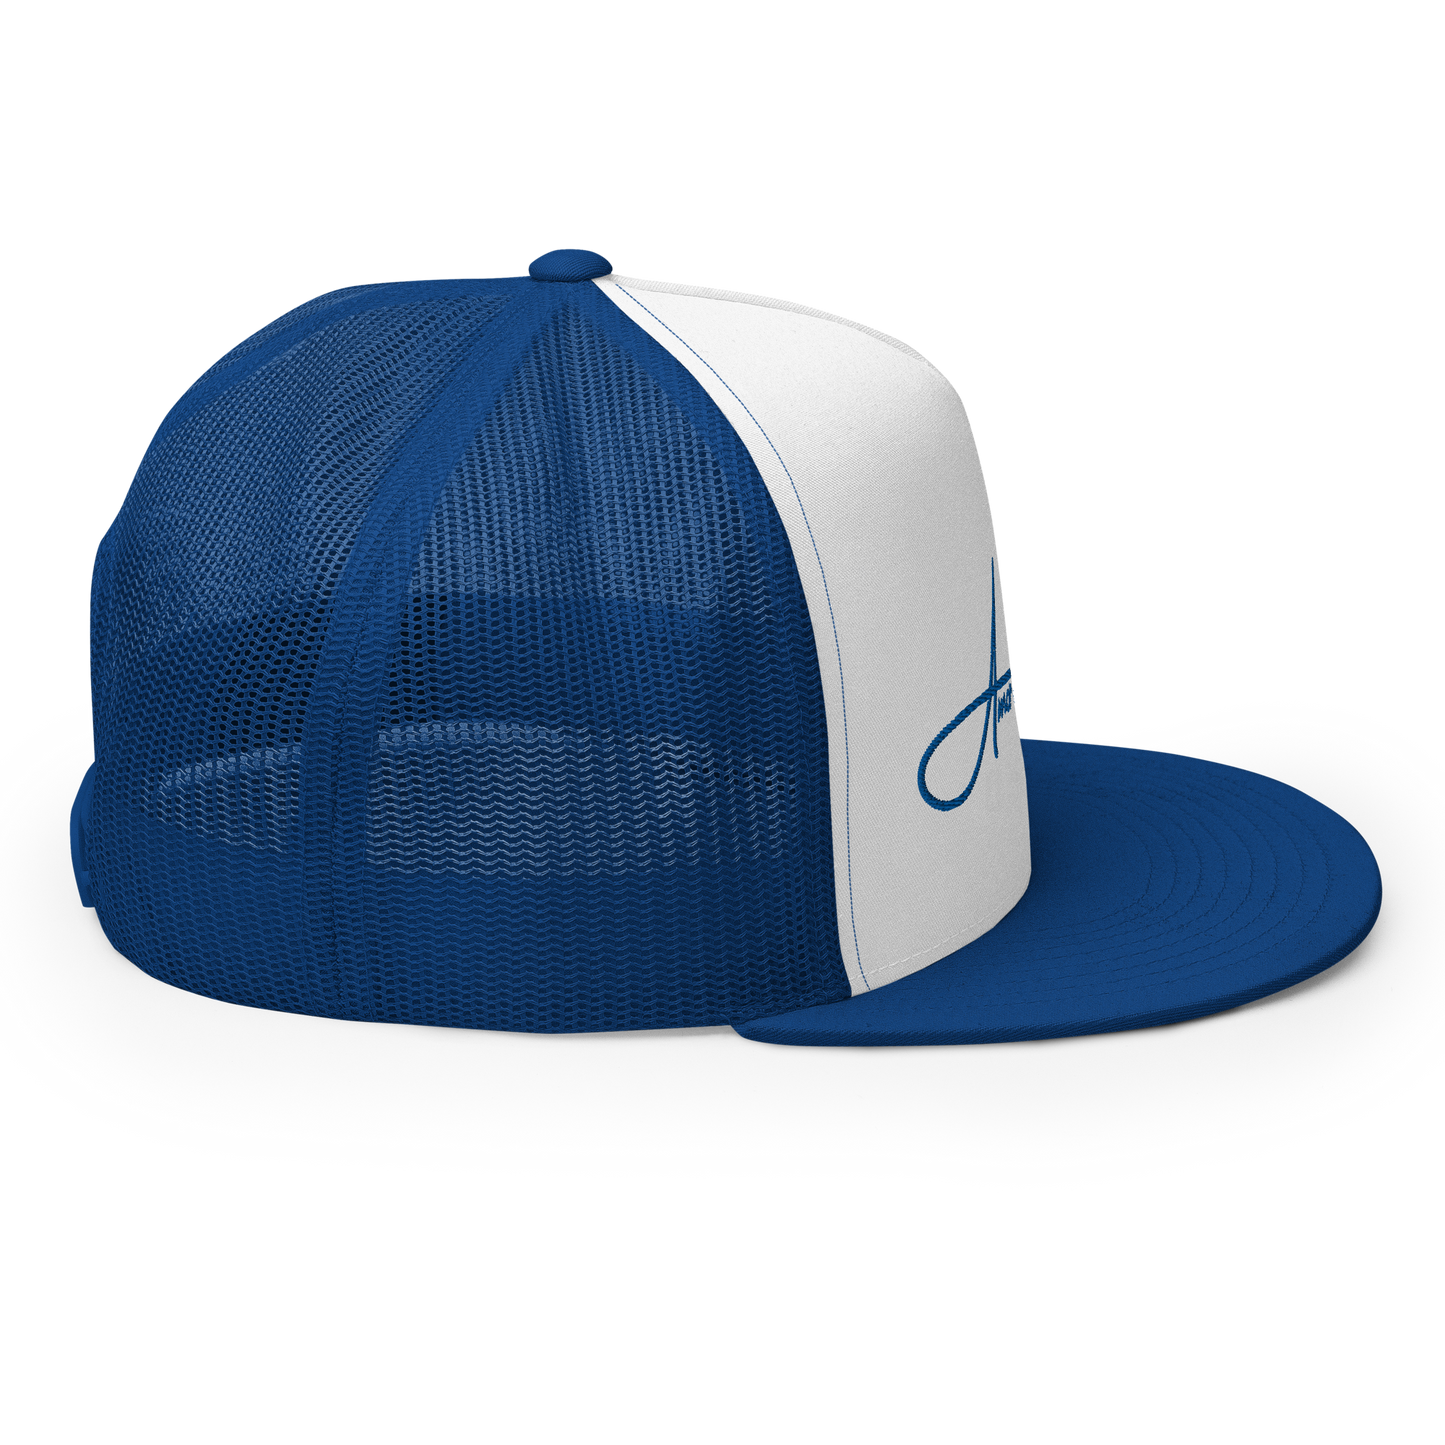 Script Logo Trucker Crwn - BLUE/WHITE